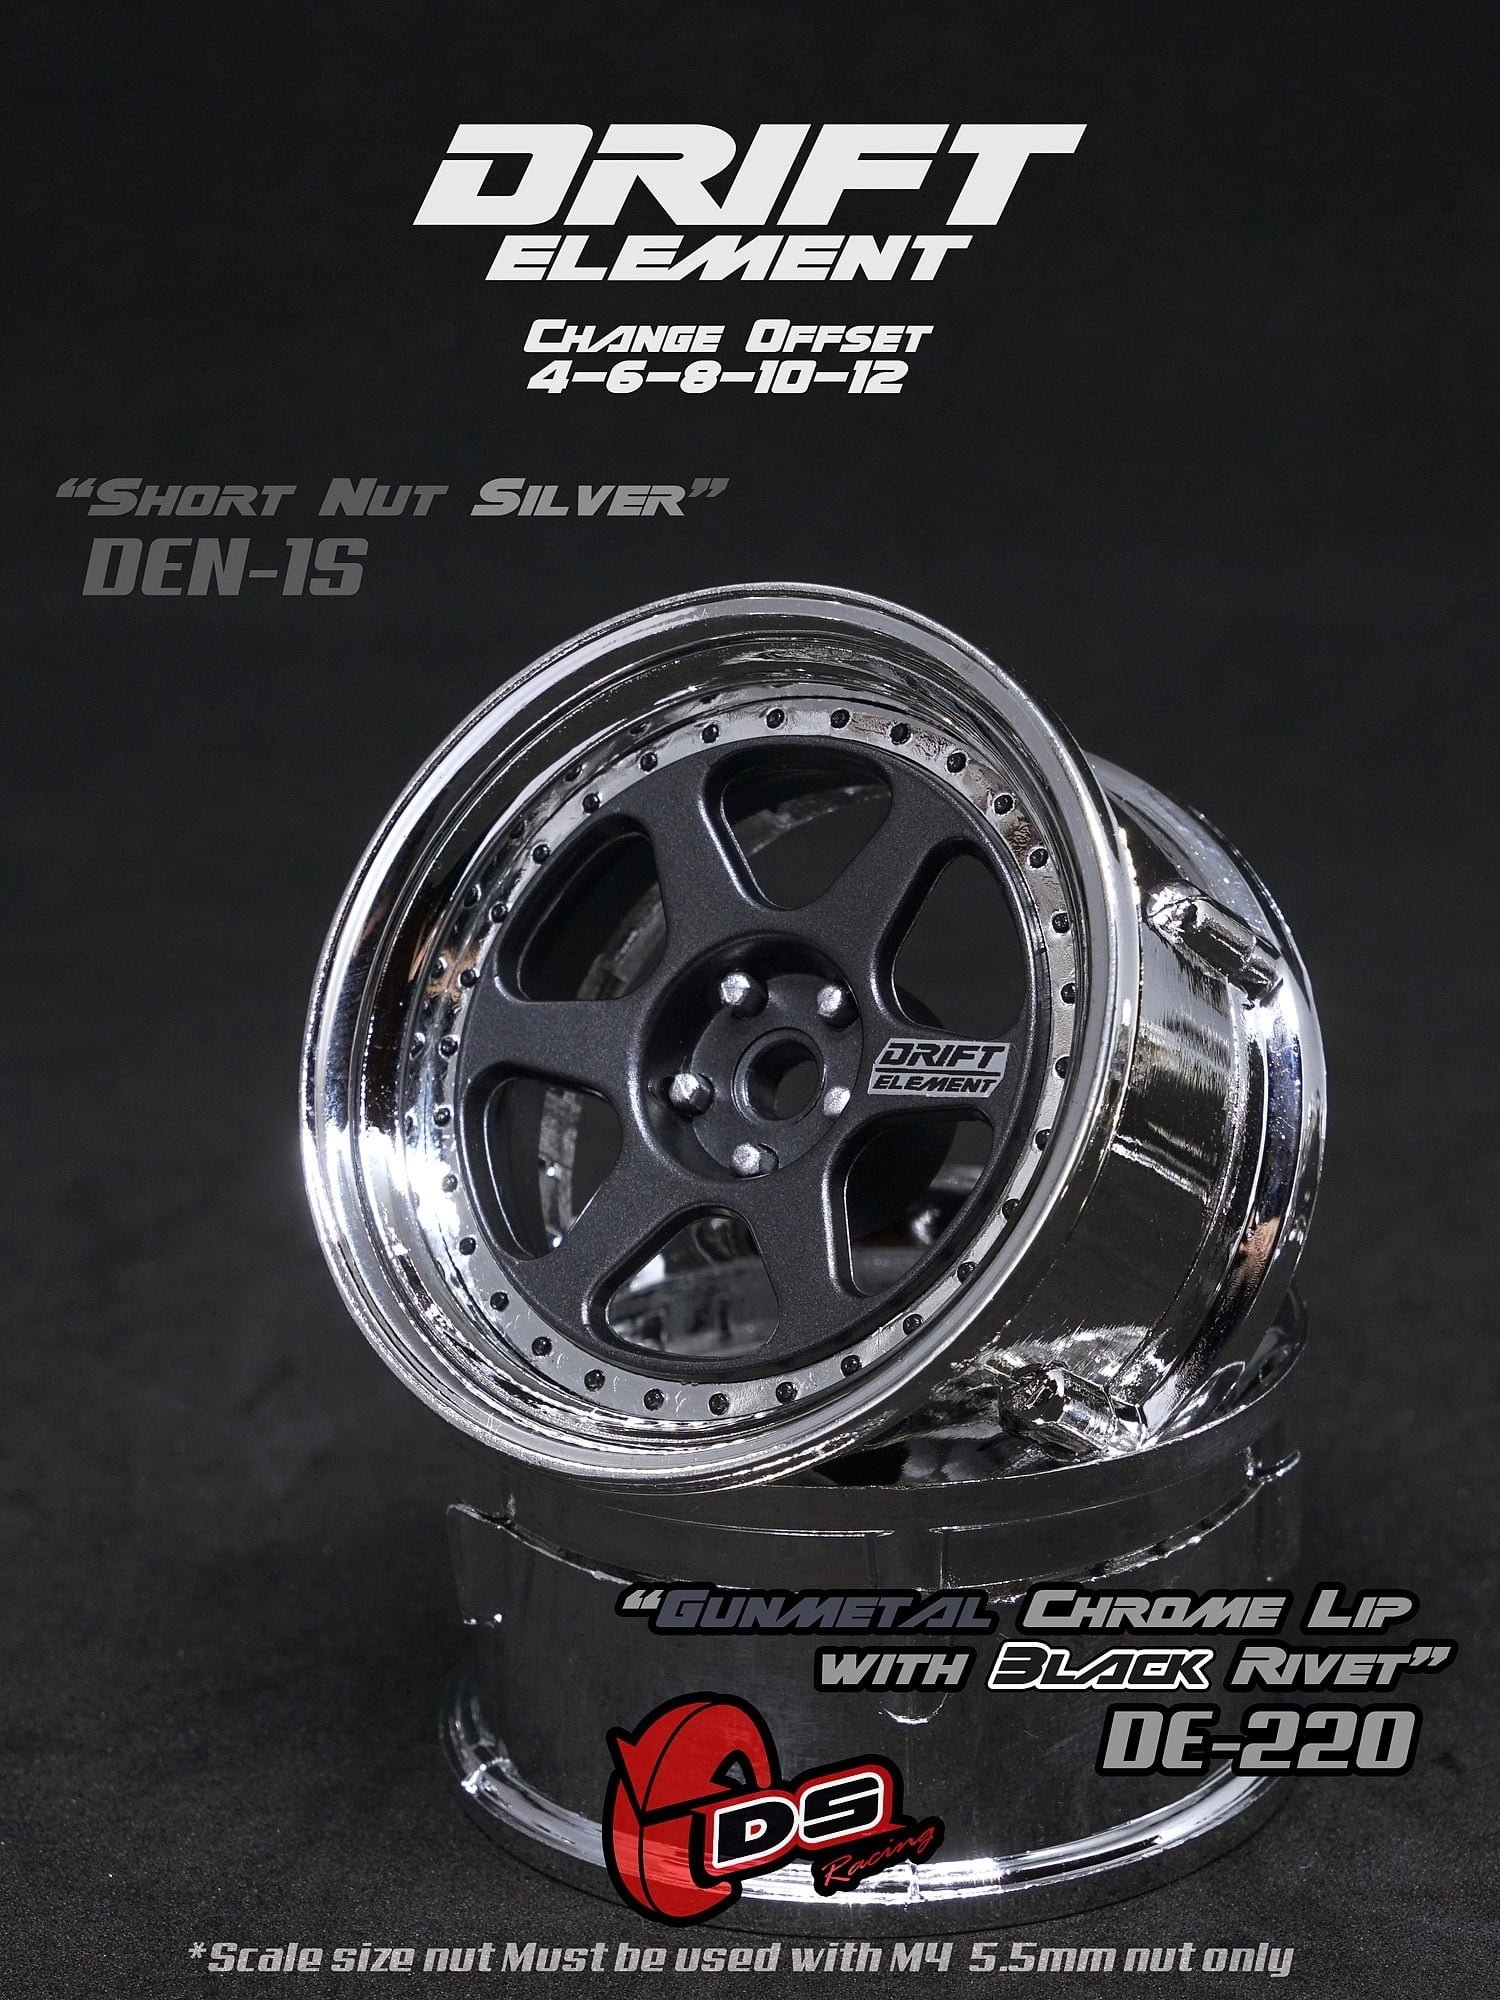 DS Racing Drift Element II 6 Spoke Rim 2 pcs Gunmetal Chrome Lip with Black Rivets – DE-220